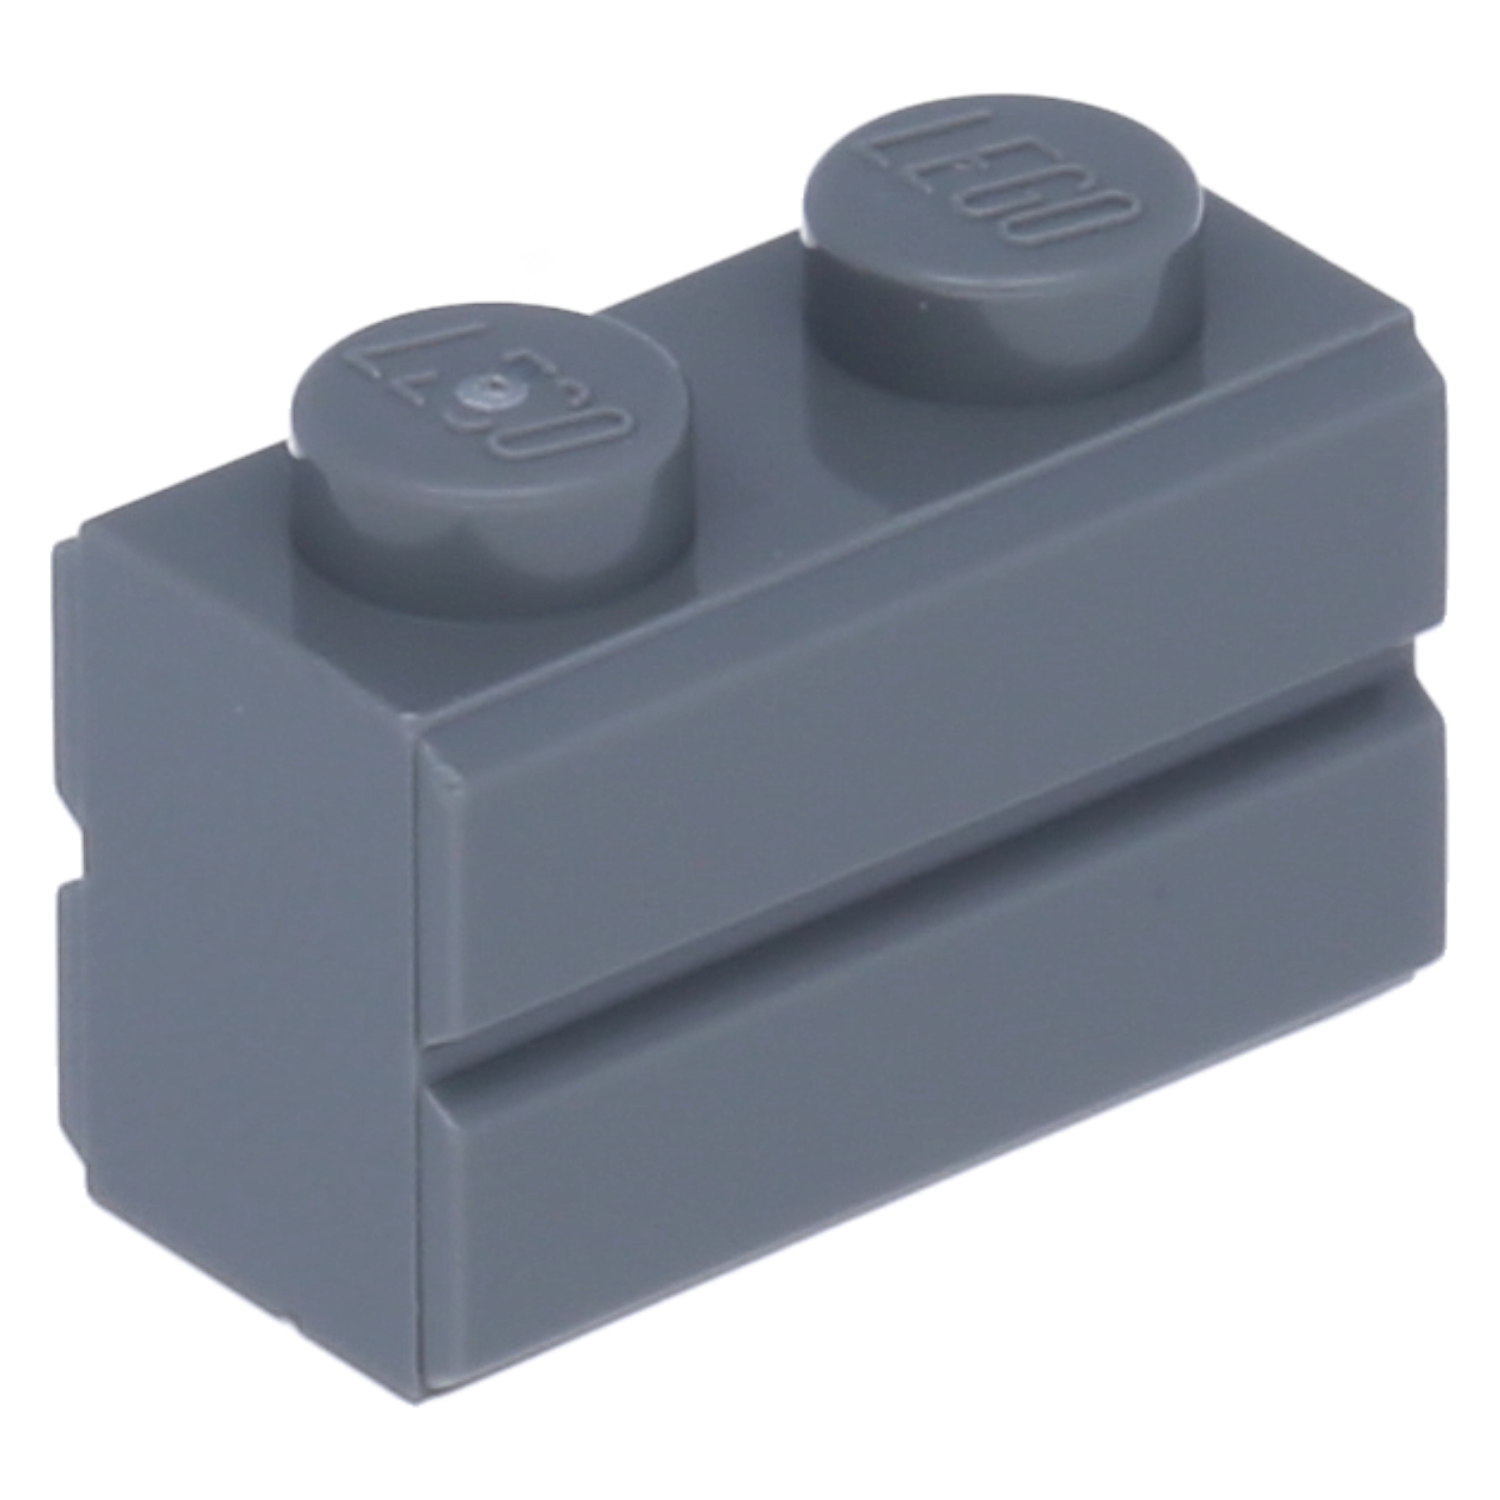 LEGO stones (modified) - 1 x 2 with masonry profile